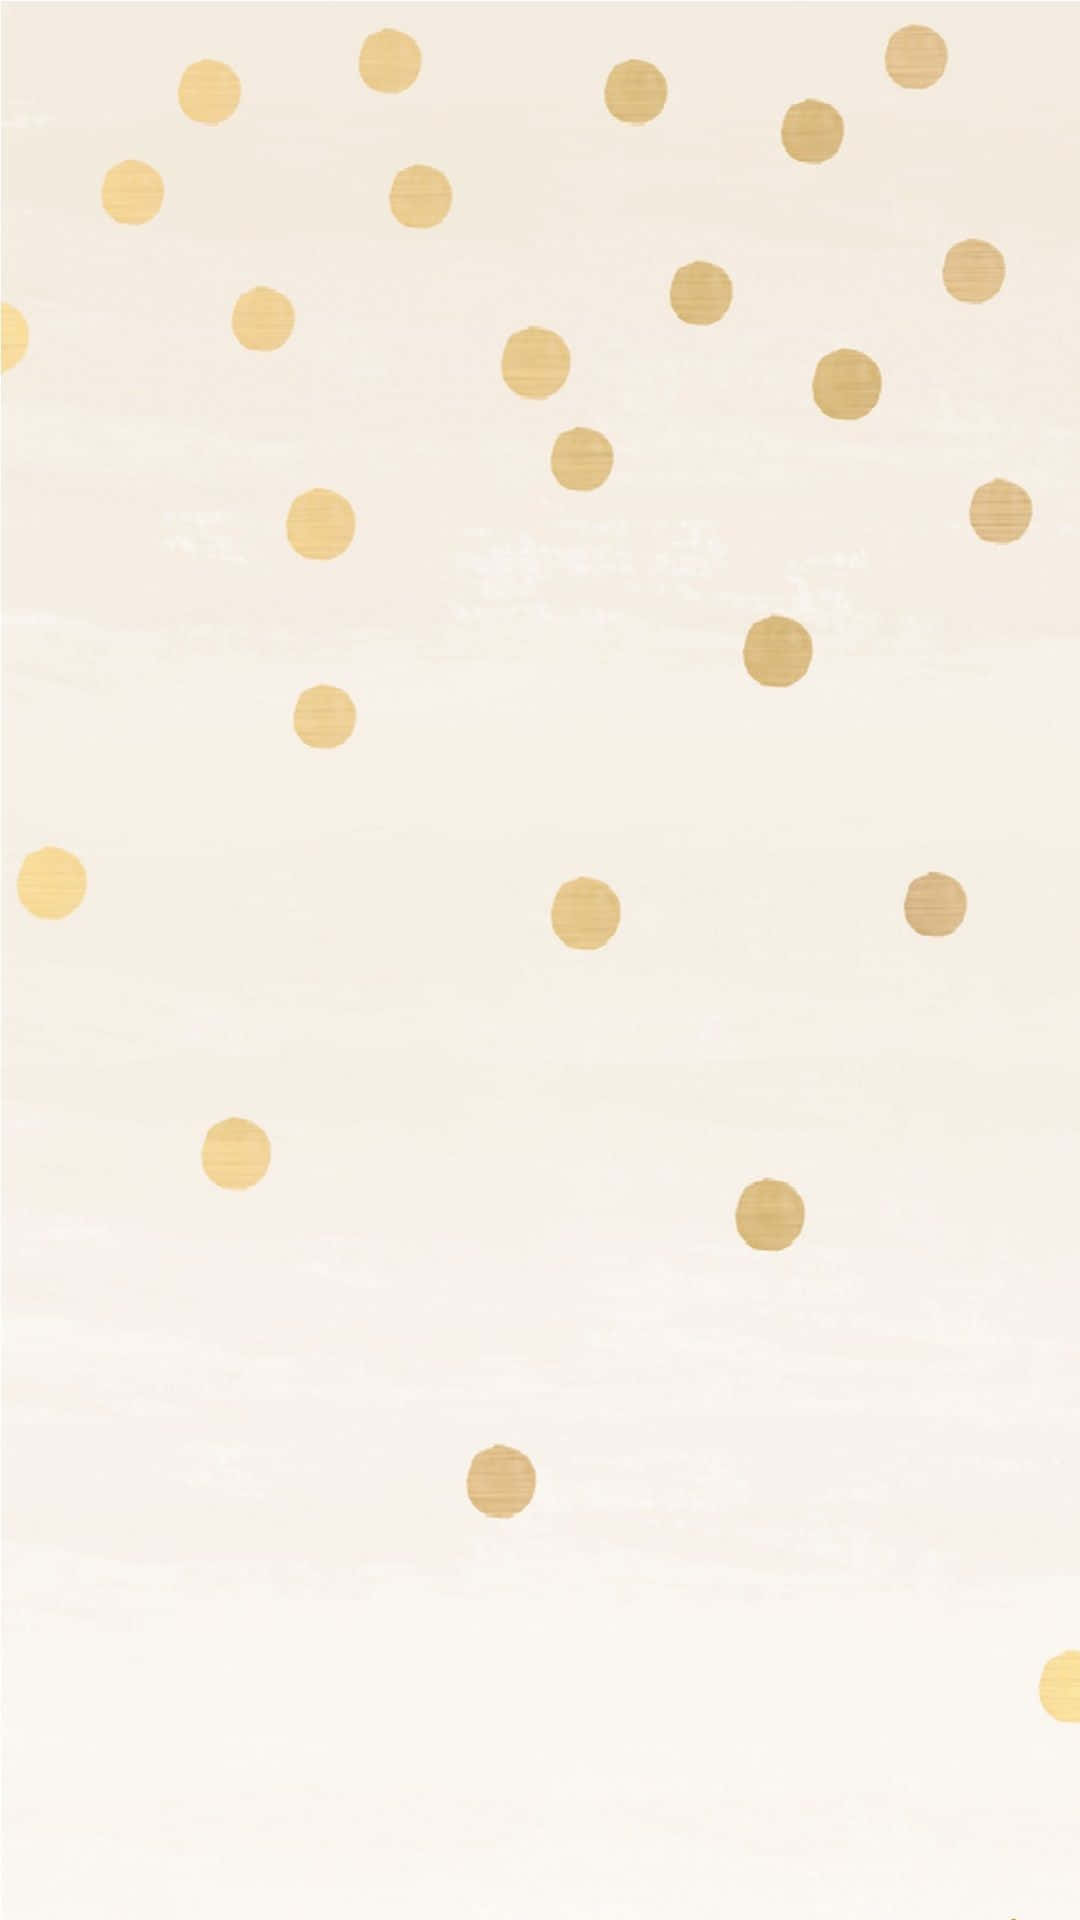 Rose Gold Phone 1080 X 1920 Wallpaper